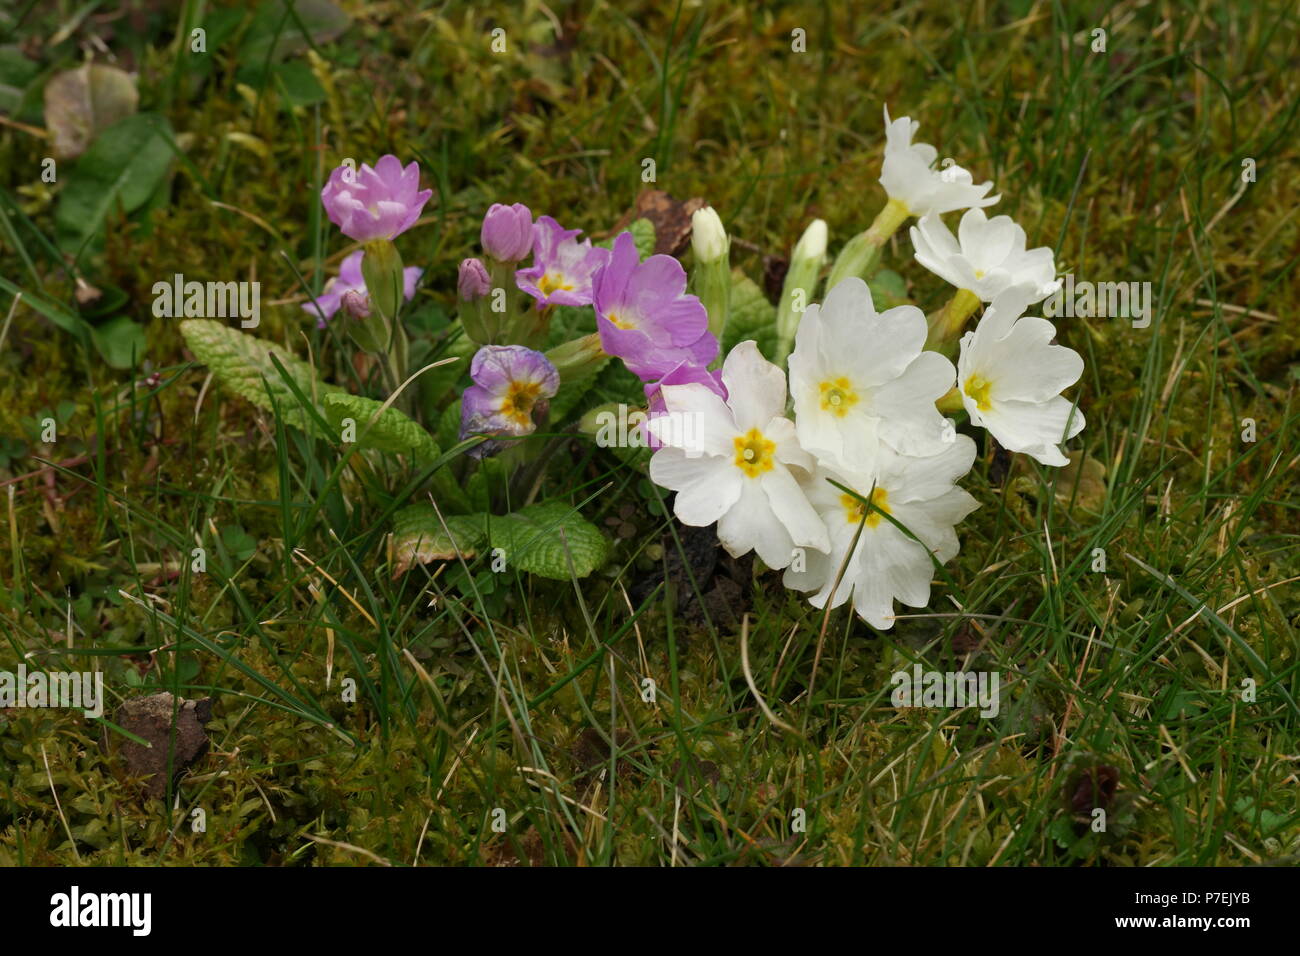 Primula vulgaris (Garten-Primel) (Primrose) (Primevère commune) Stock Photo